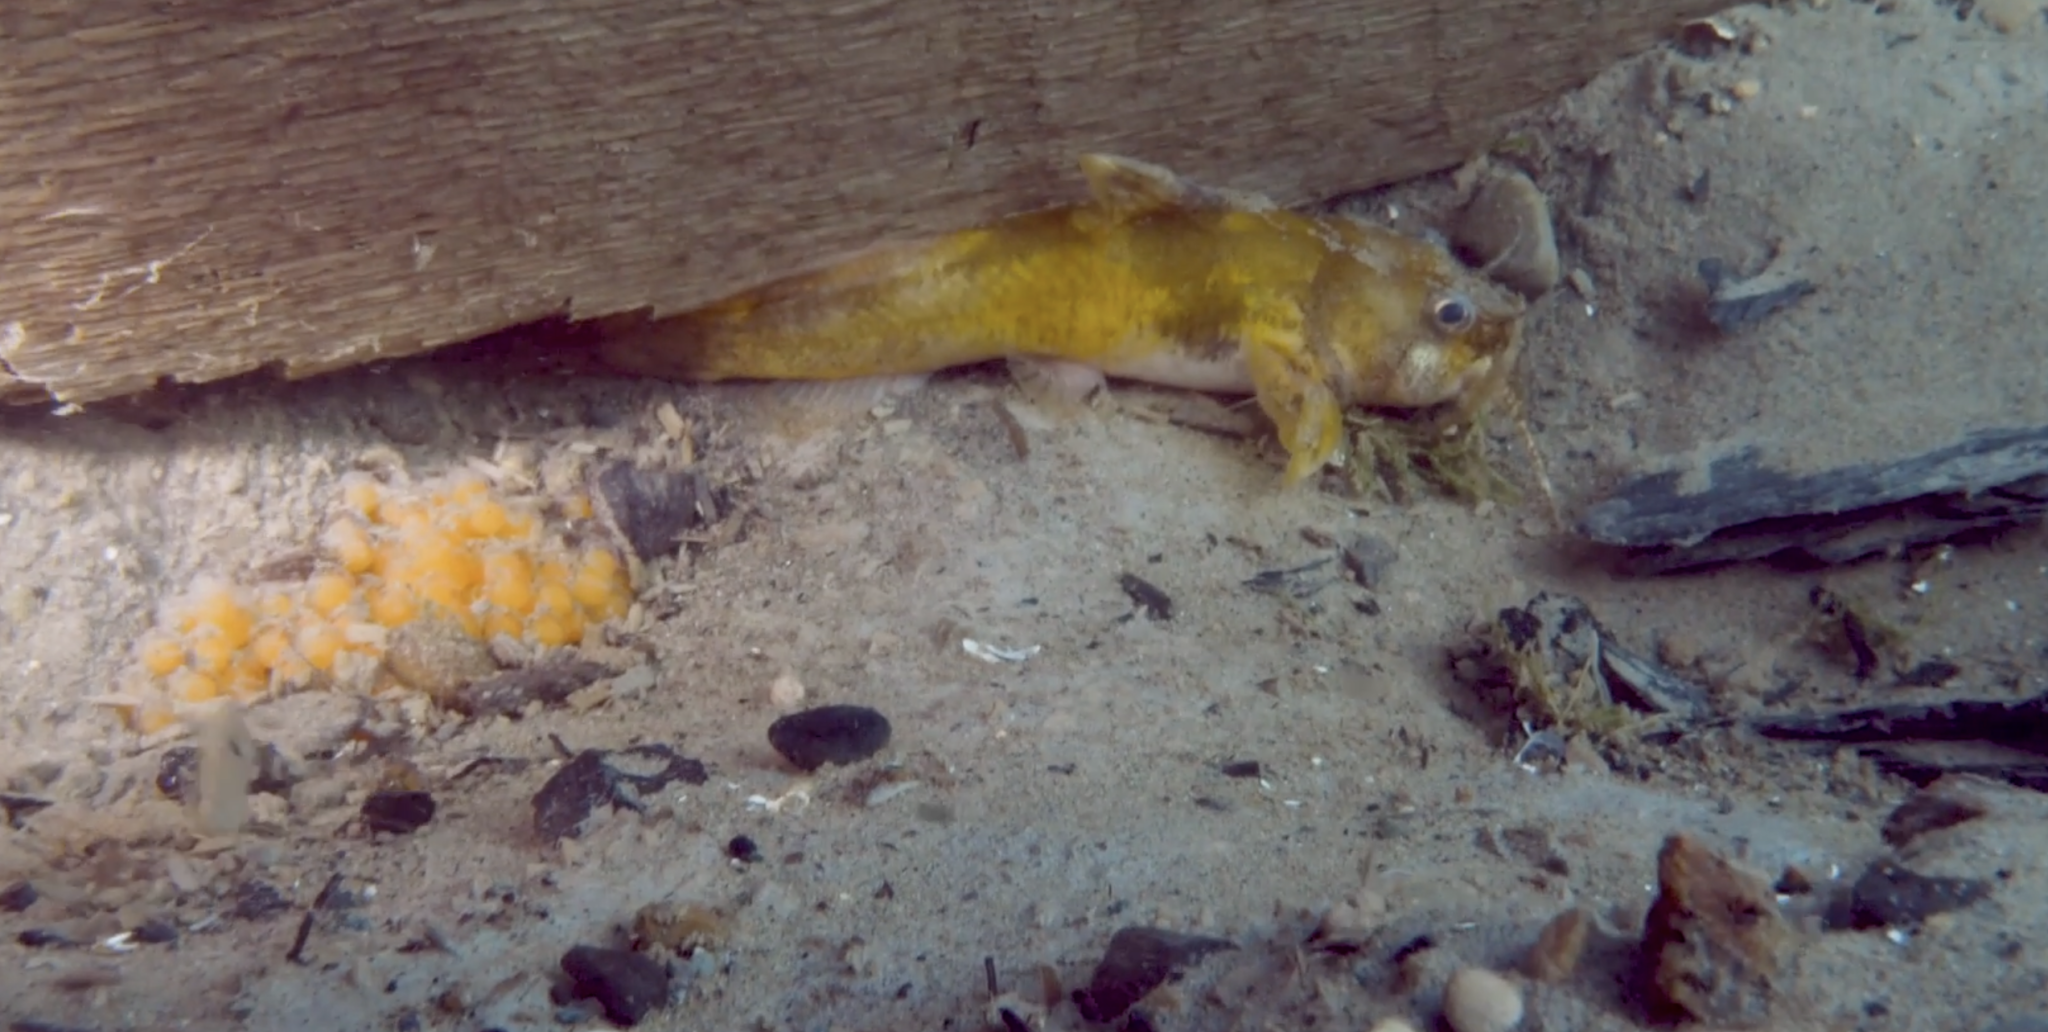 A adult madtom fish hiding under a rock